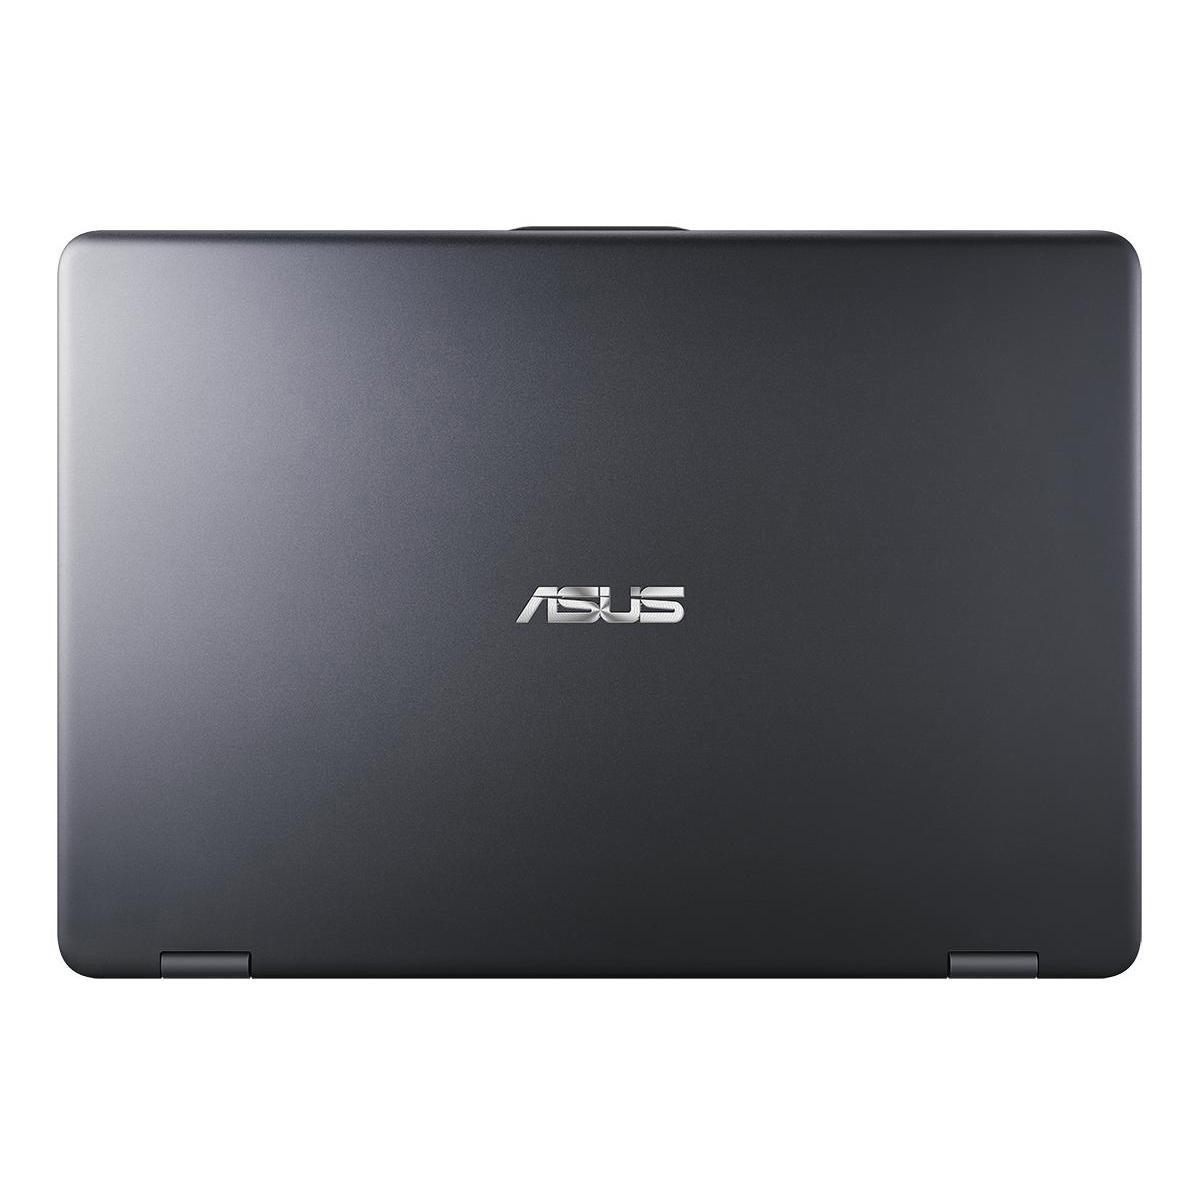 ASUS Vivobook Flip Tp410Ua-Ec474T (14'' FHD IPS,Intel Core i7-8550U,8GB,Intel HD Graphics 620,128GB SSD + 1TB HDD)